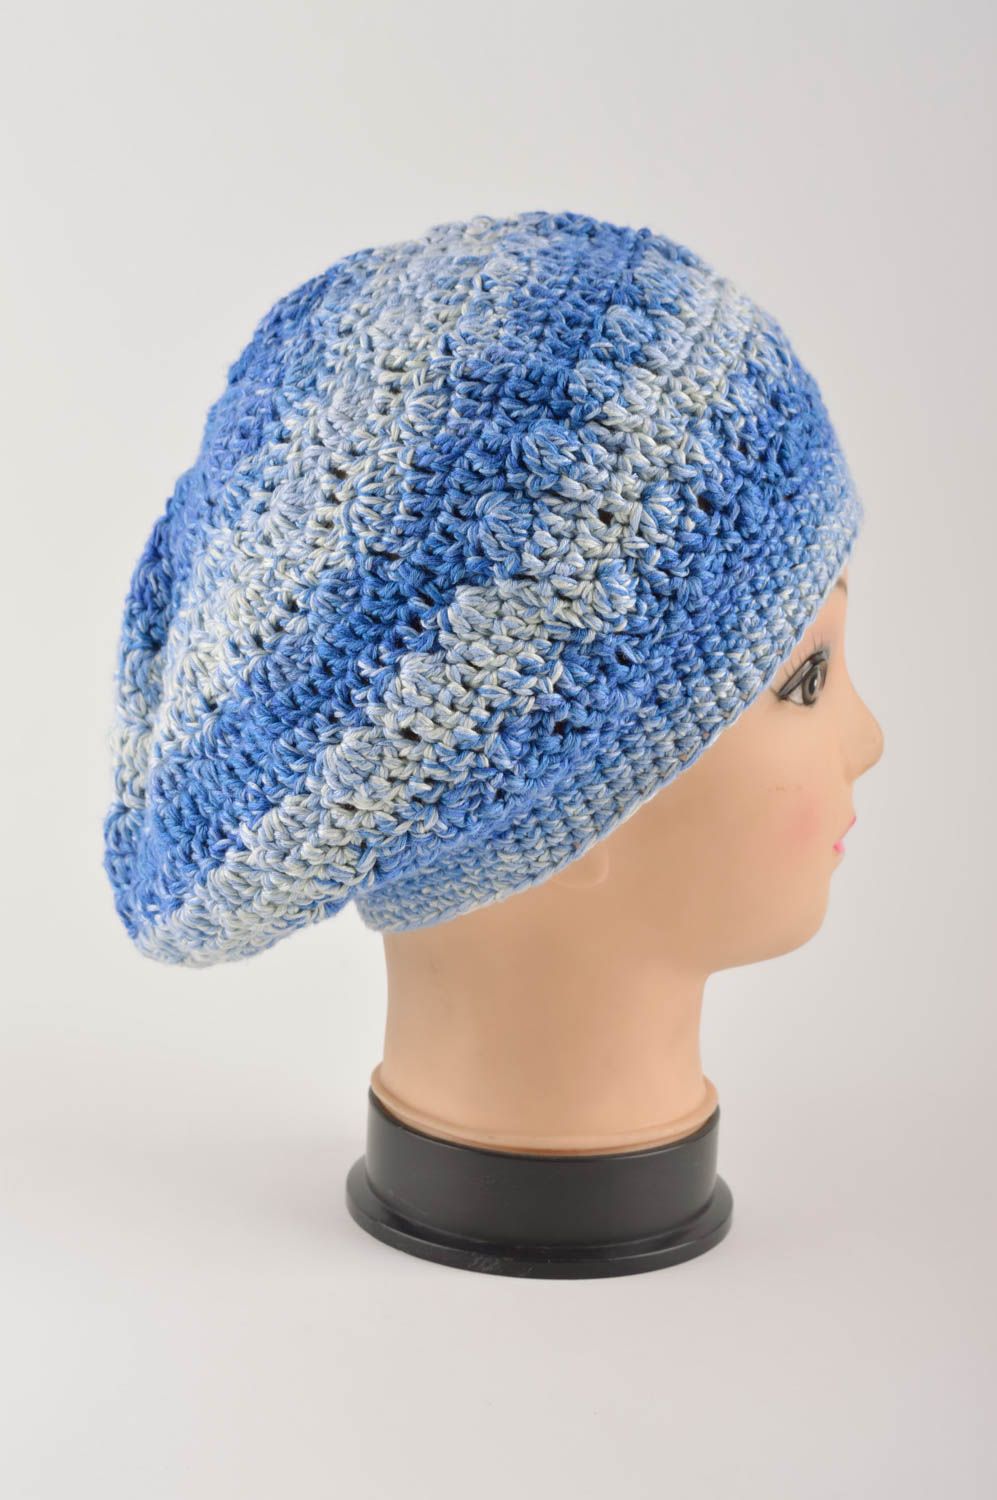 Handmade crochet hat designer accessories hats for women warm hat gifts for girl photo 4